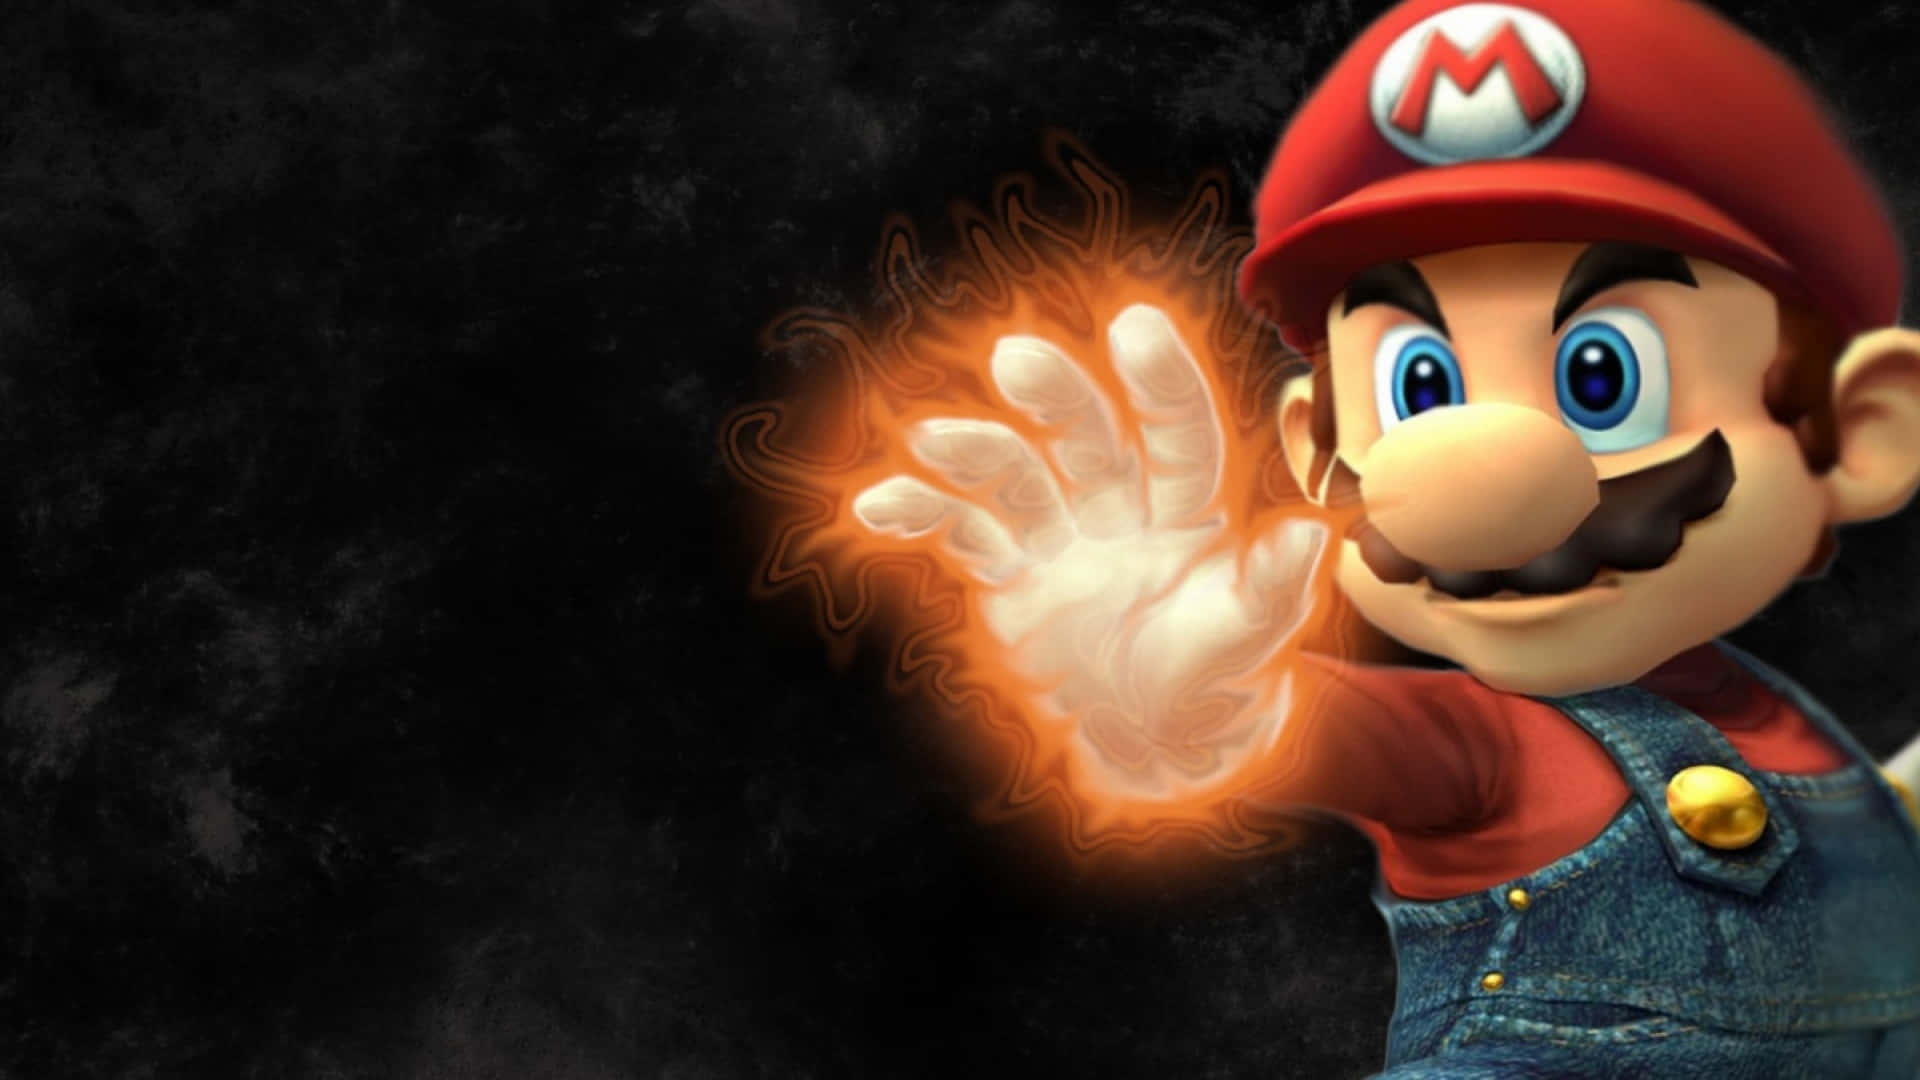 Embark on your interstellar adventure with Super Mario Galaxy! Wallpaper